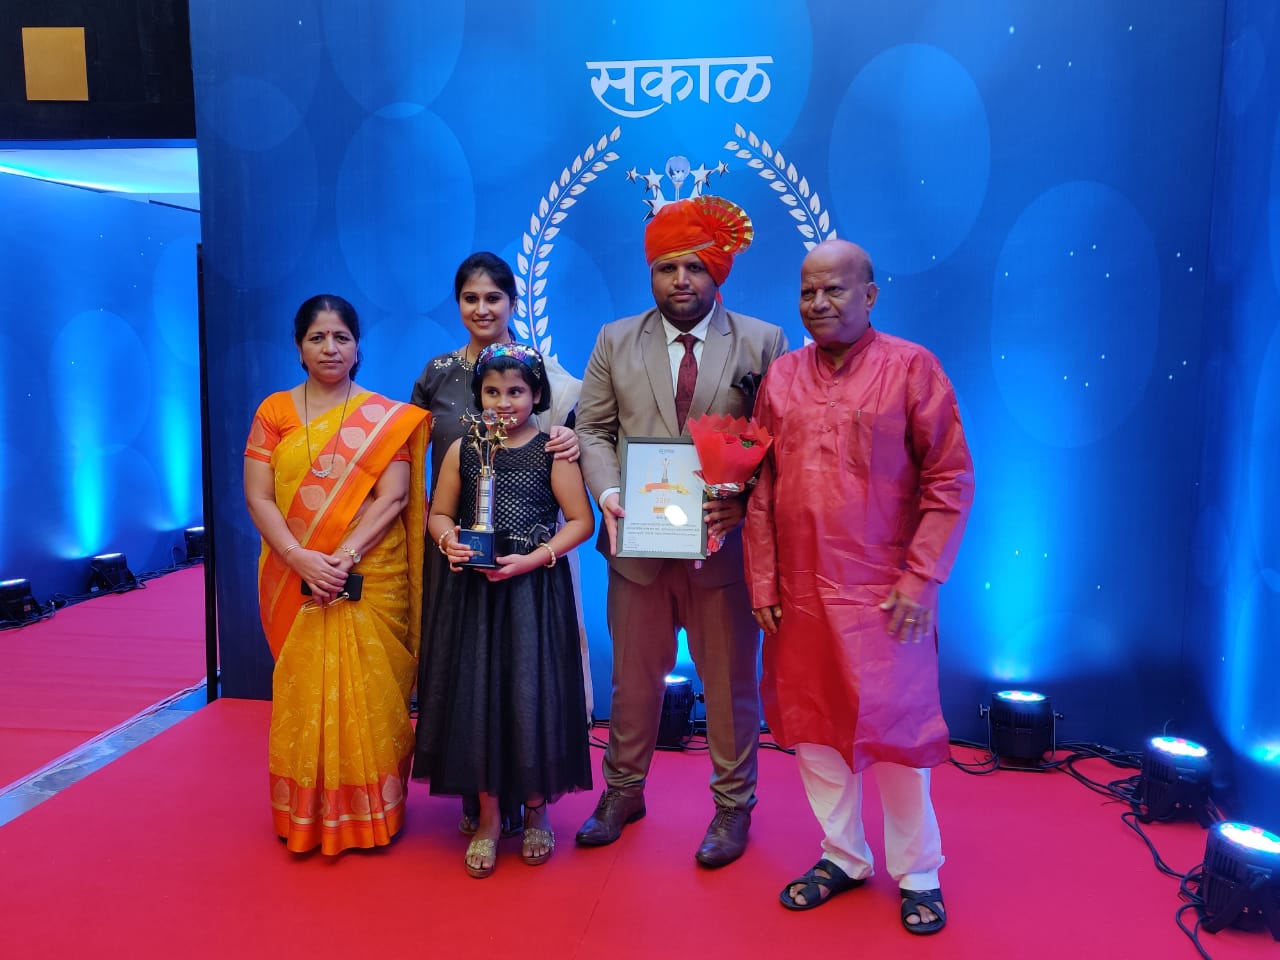 Sakal Excellence Award 2019